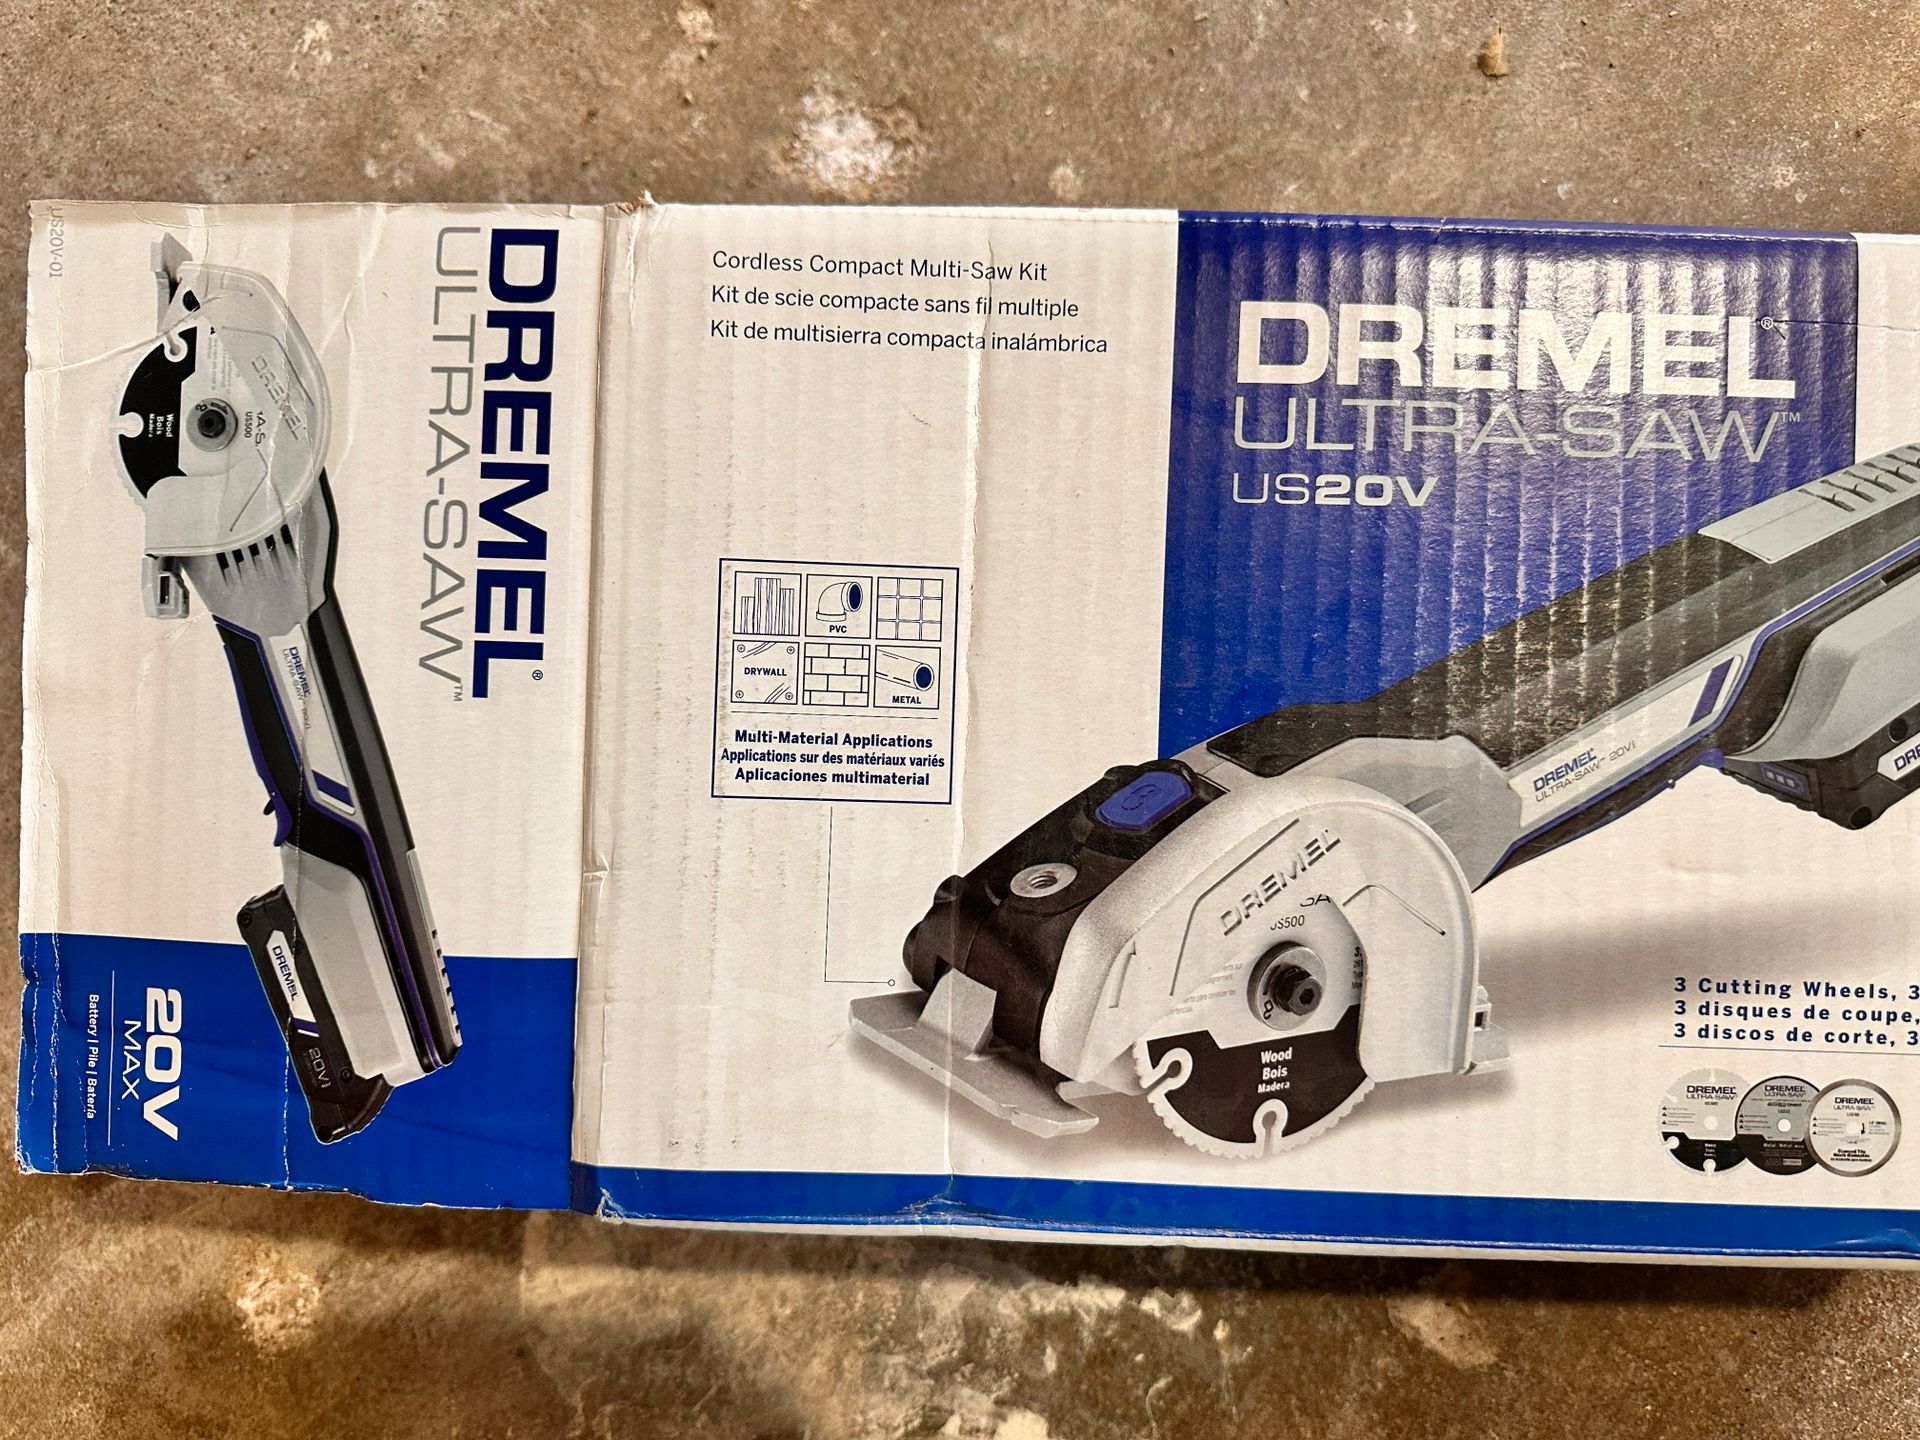 Dremel Cordless Compact Multi-Saw Kit